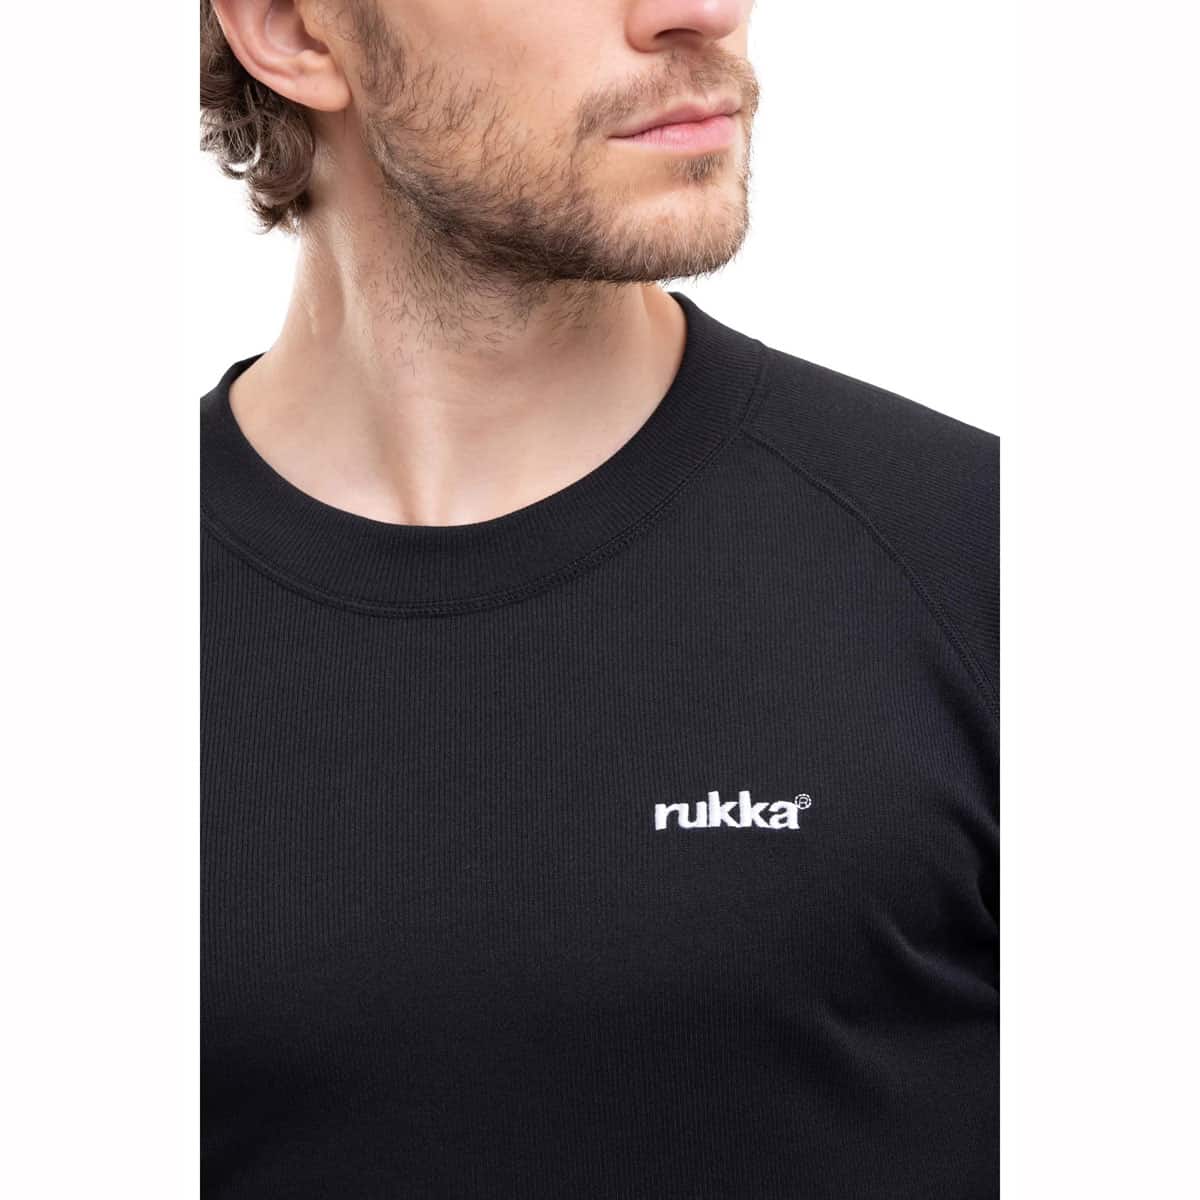 Rukka Mark Thermal Baselayer Set: Premium quality all year underwear